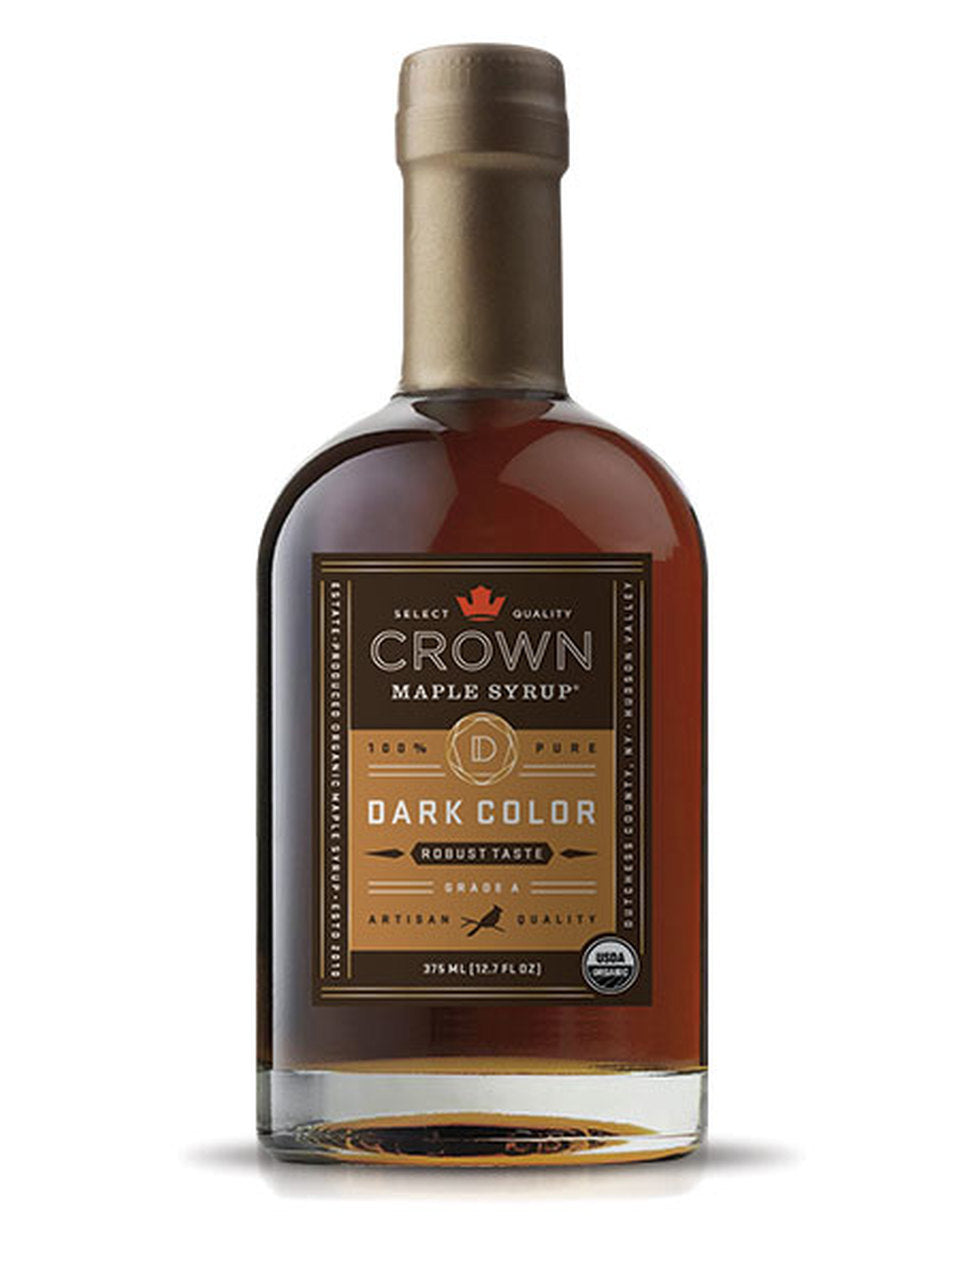 Crown Maple, Dark Color Robust Taste Organic Maple Syrup, 375ml (12.7 oz )